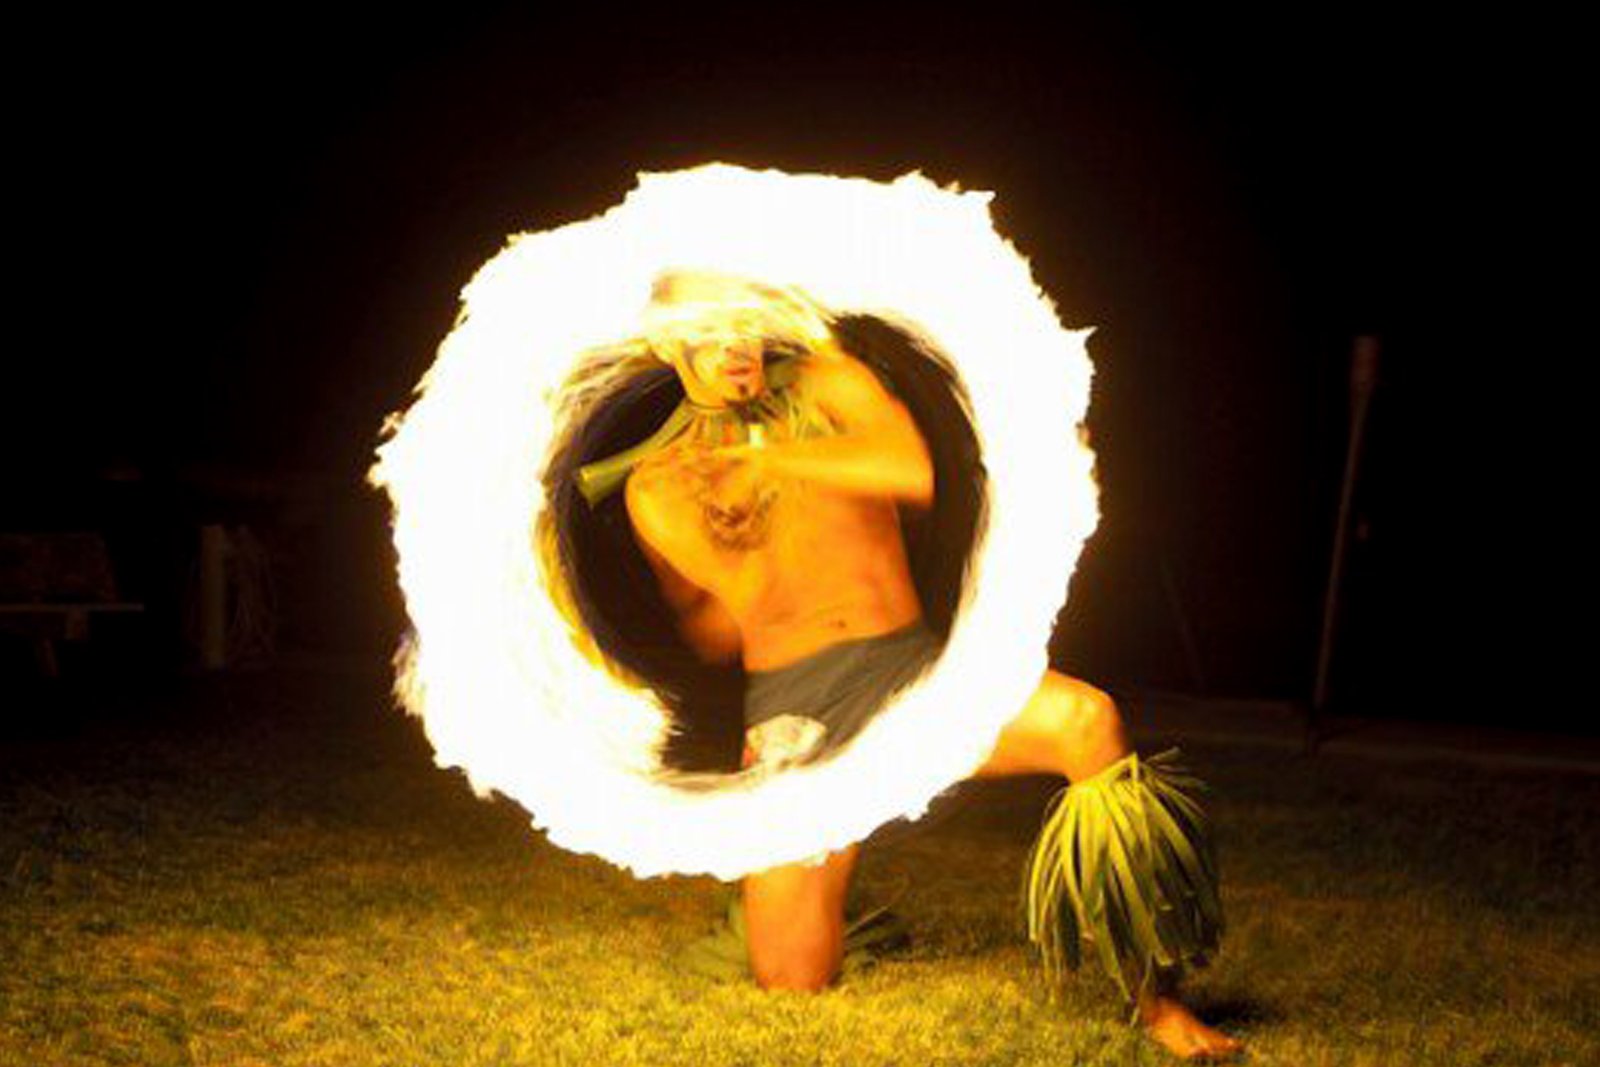 maori warrior fire dancer